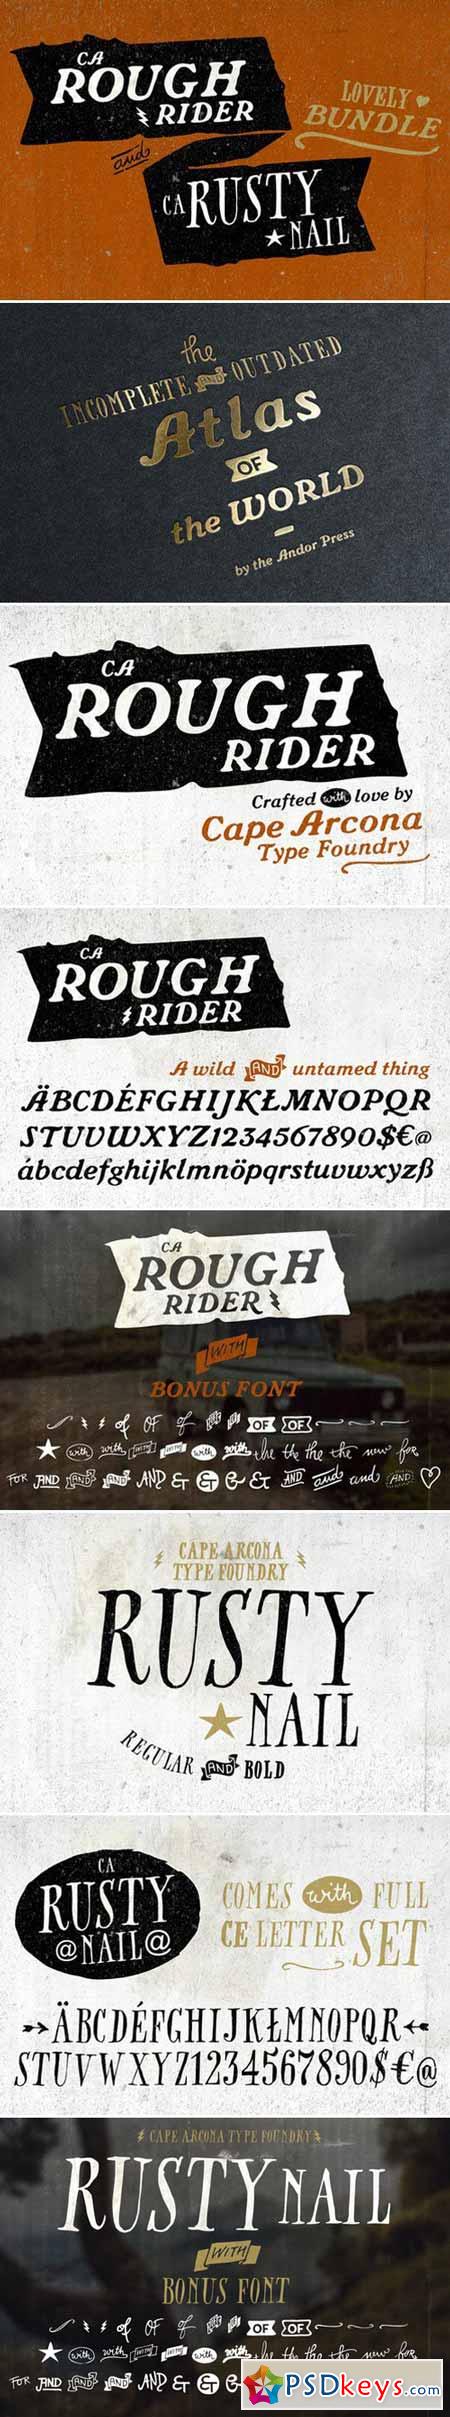 CA Rusty Nail + CA Rough Rider Set 422985